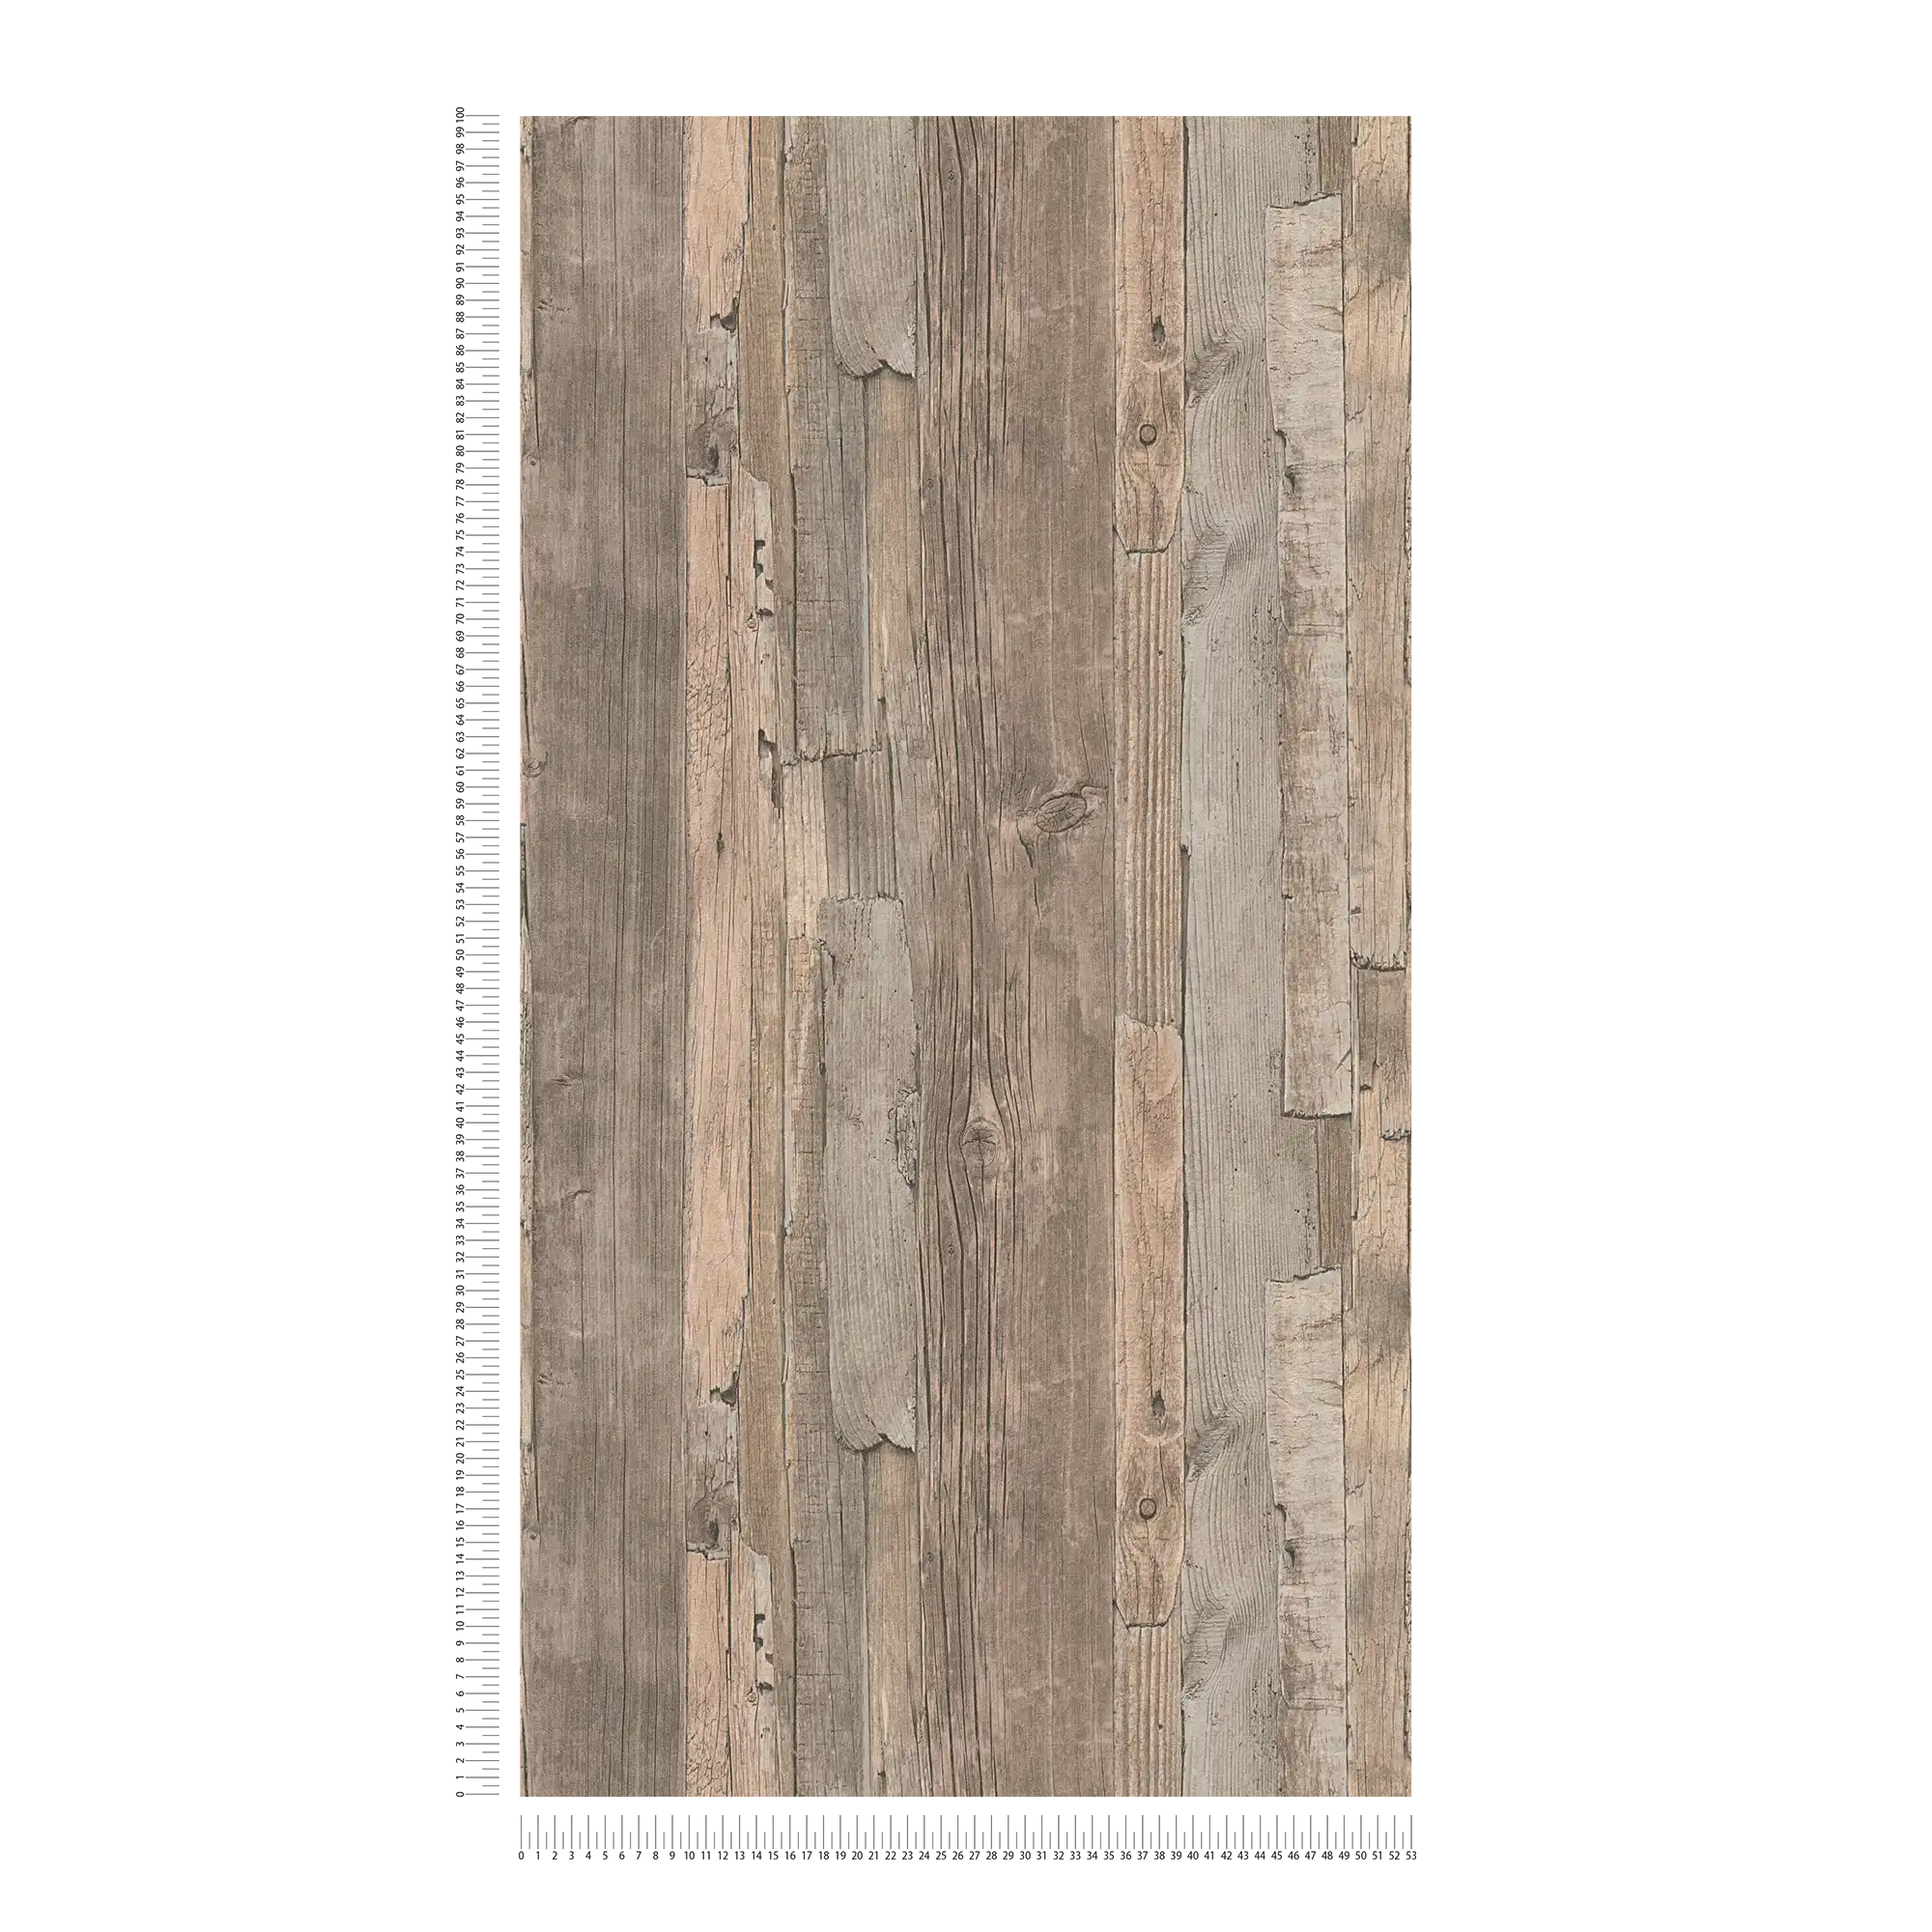             Wallpaper with board pattern, wood in used design - beige, brown
        